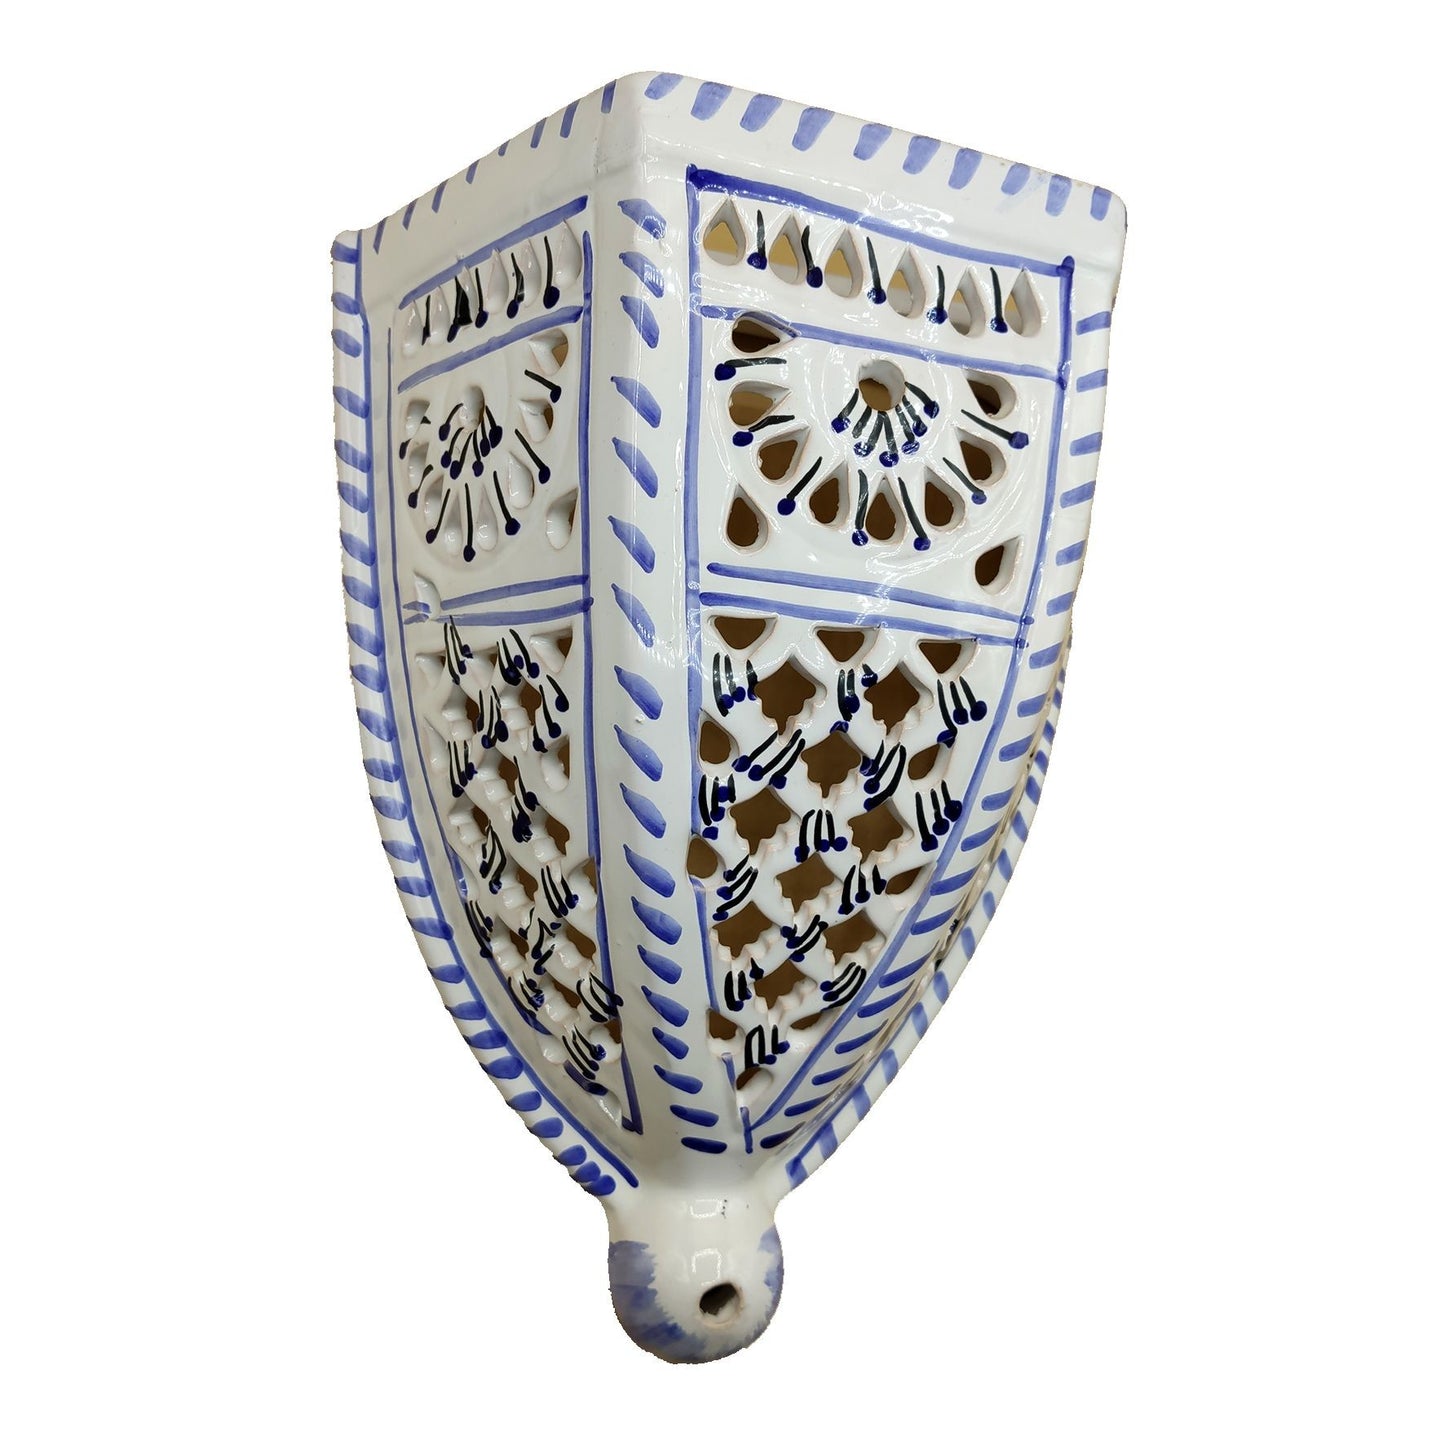 Arredo Etnico Applique Parete Lampada Terracotta Tunisina Marocchina 0412001005